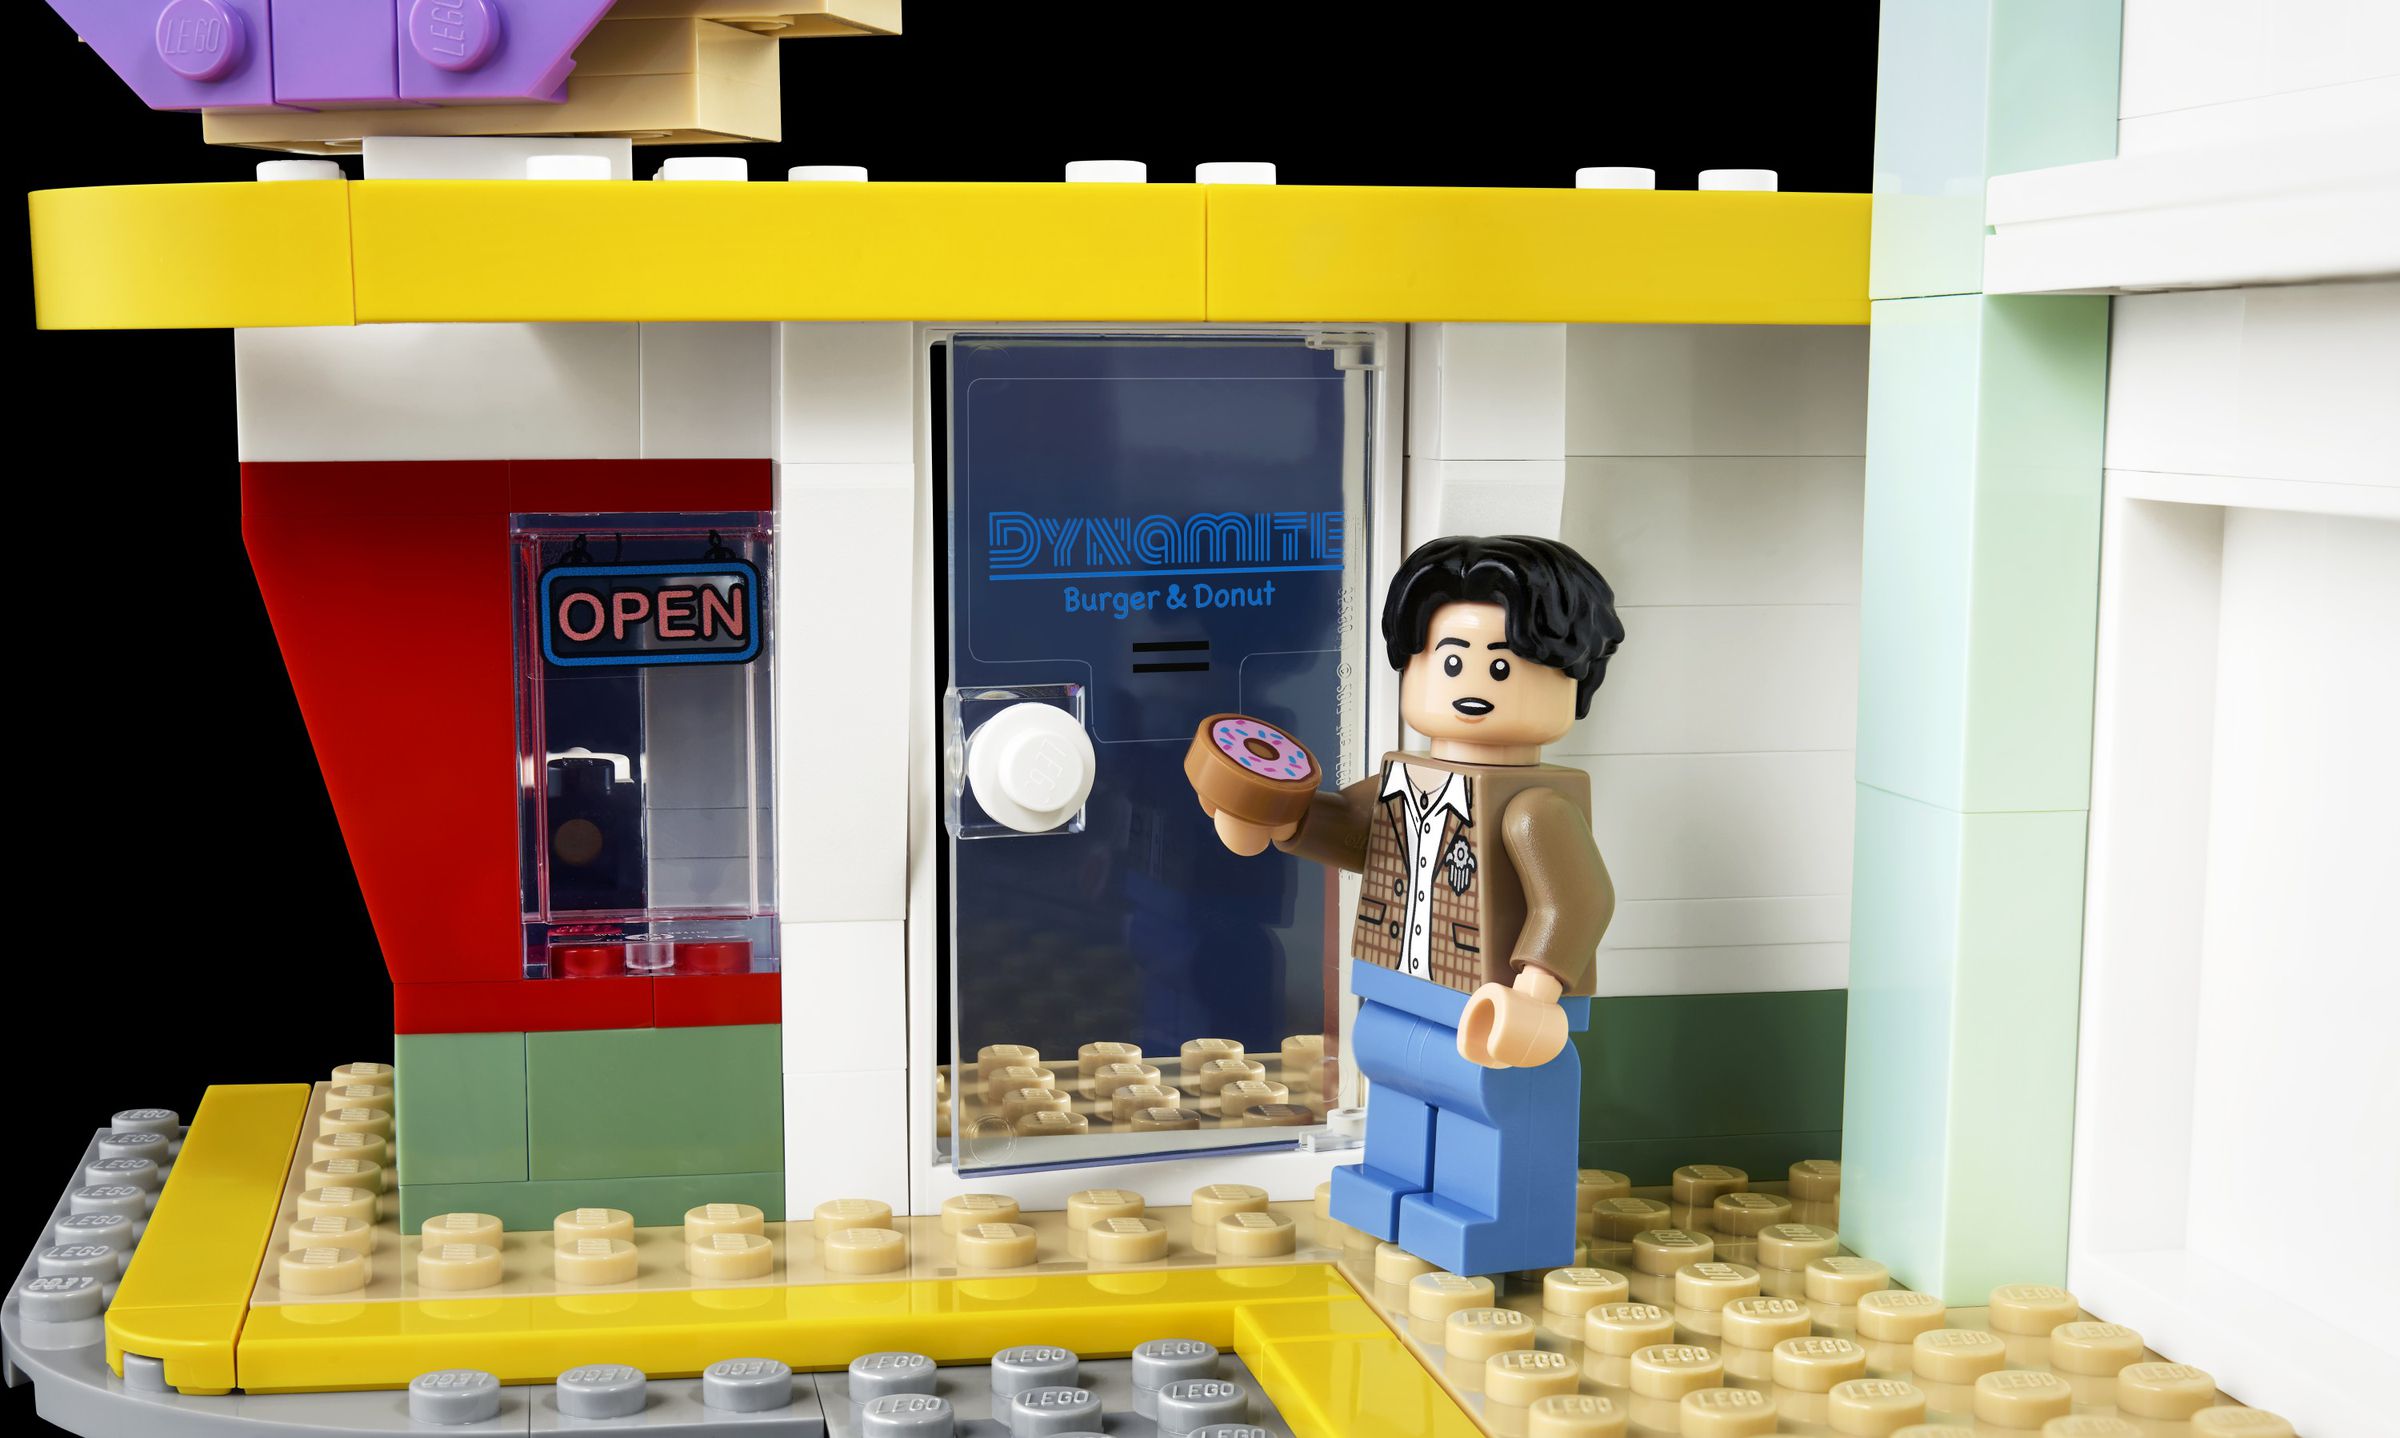 Lego figurine of Jungkook holding Lego doughnut outside a Lego doughnut shop.